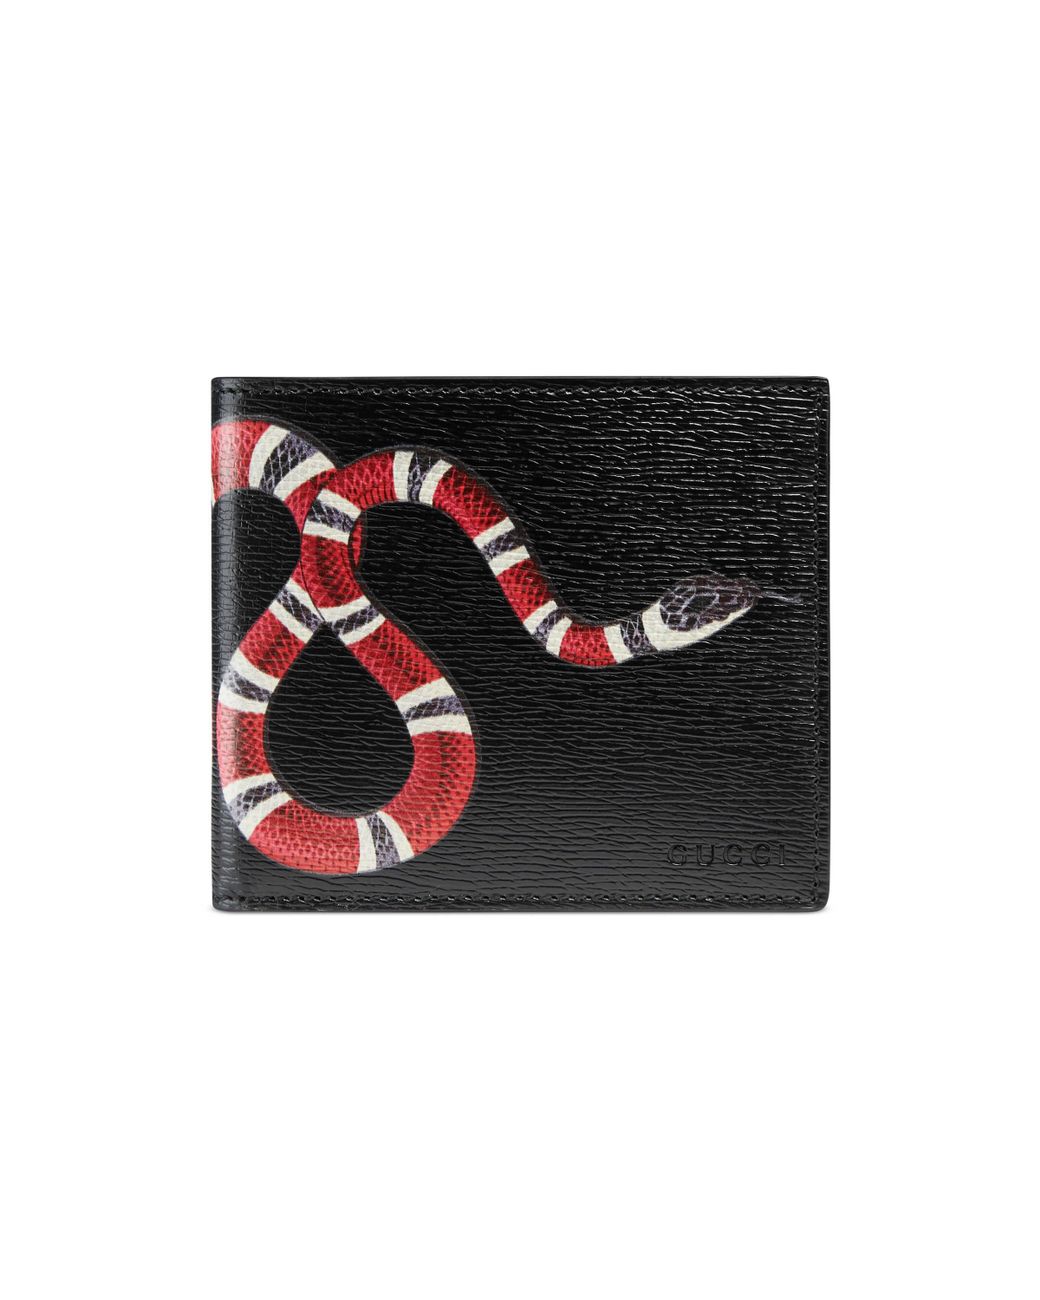 Gucci Leather Black Snake GG Wallet for Men - Save 9% - Lyst